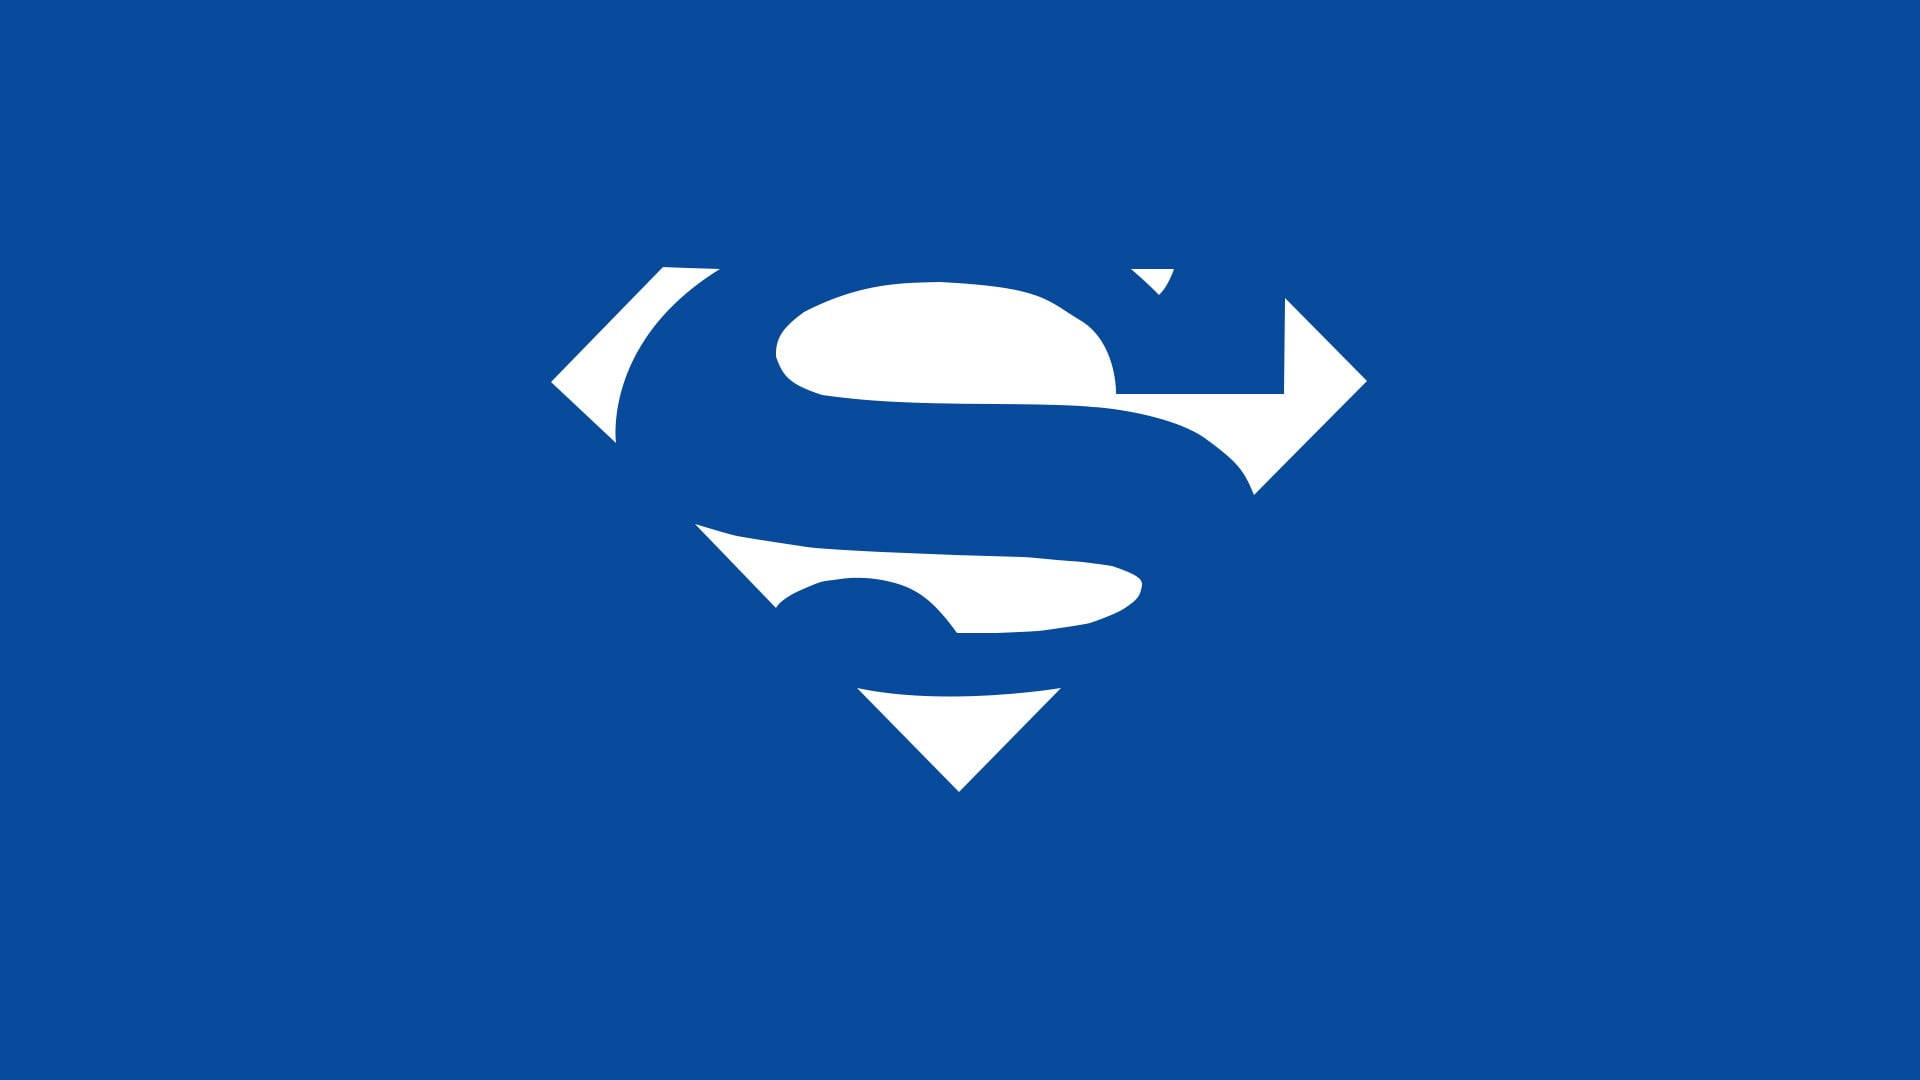 Minimalist Blue And White Superman Logo Wallpaper